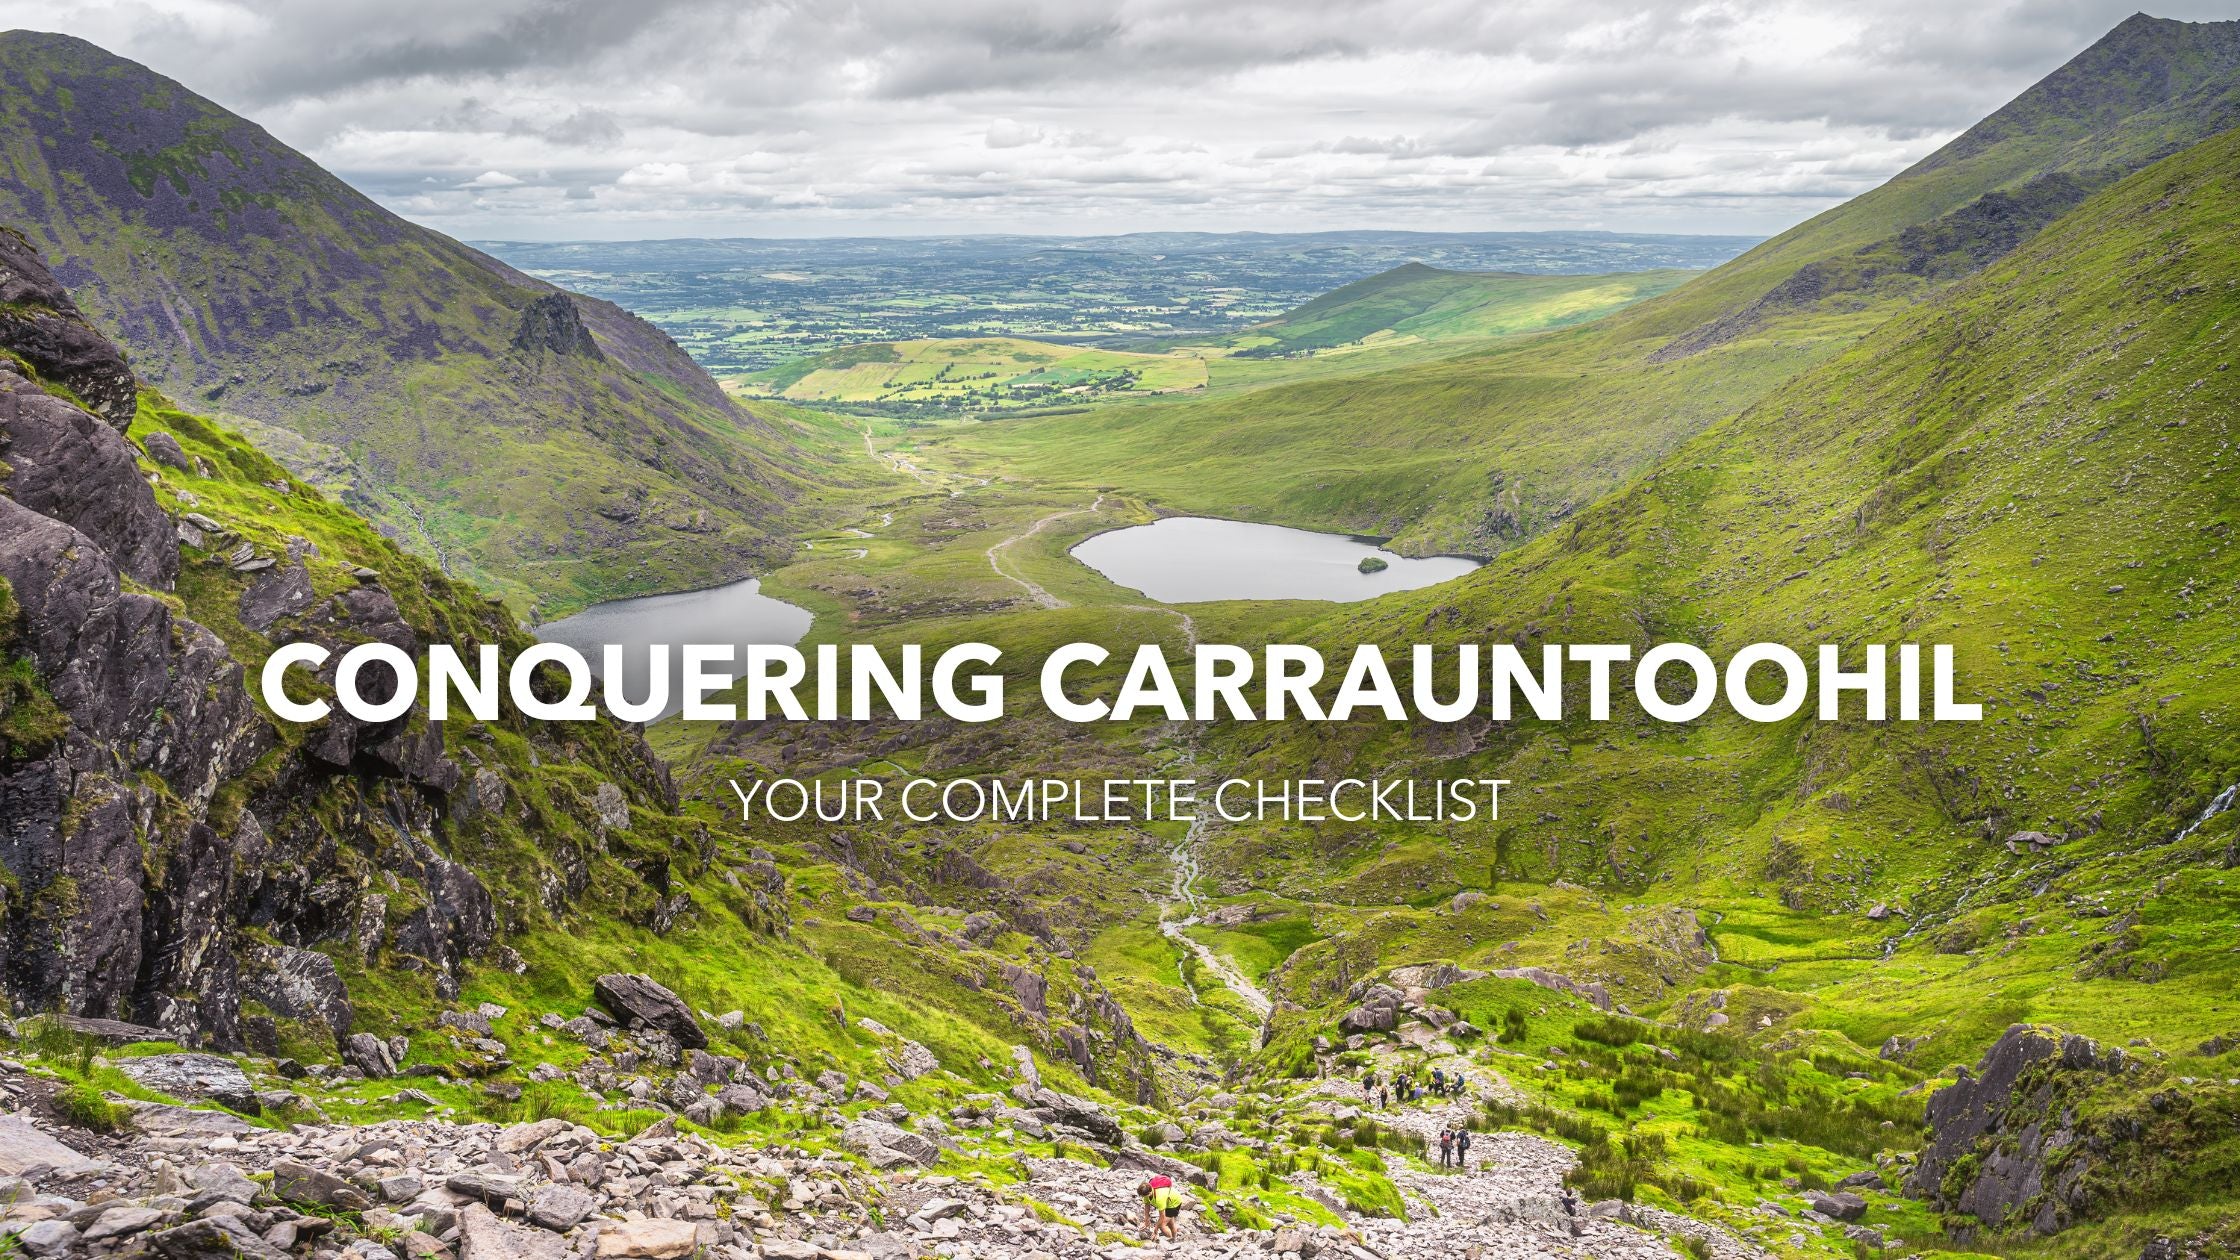 Conquering Carrauntoohil- The Complete Checklist